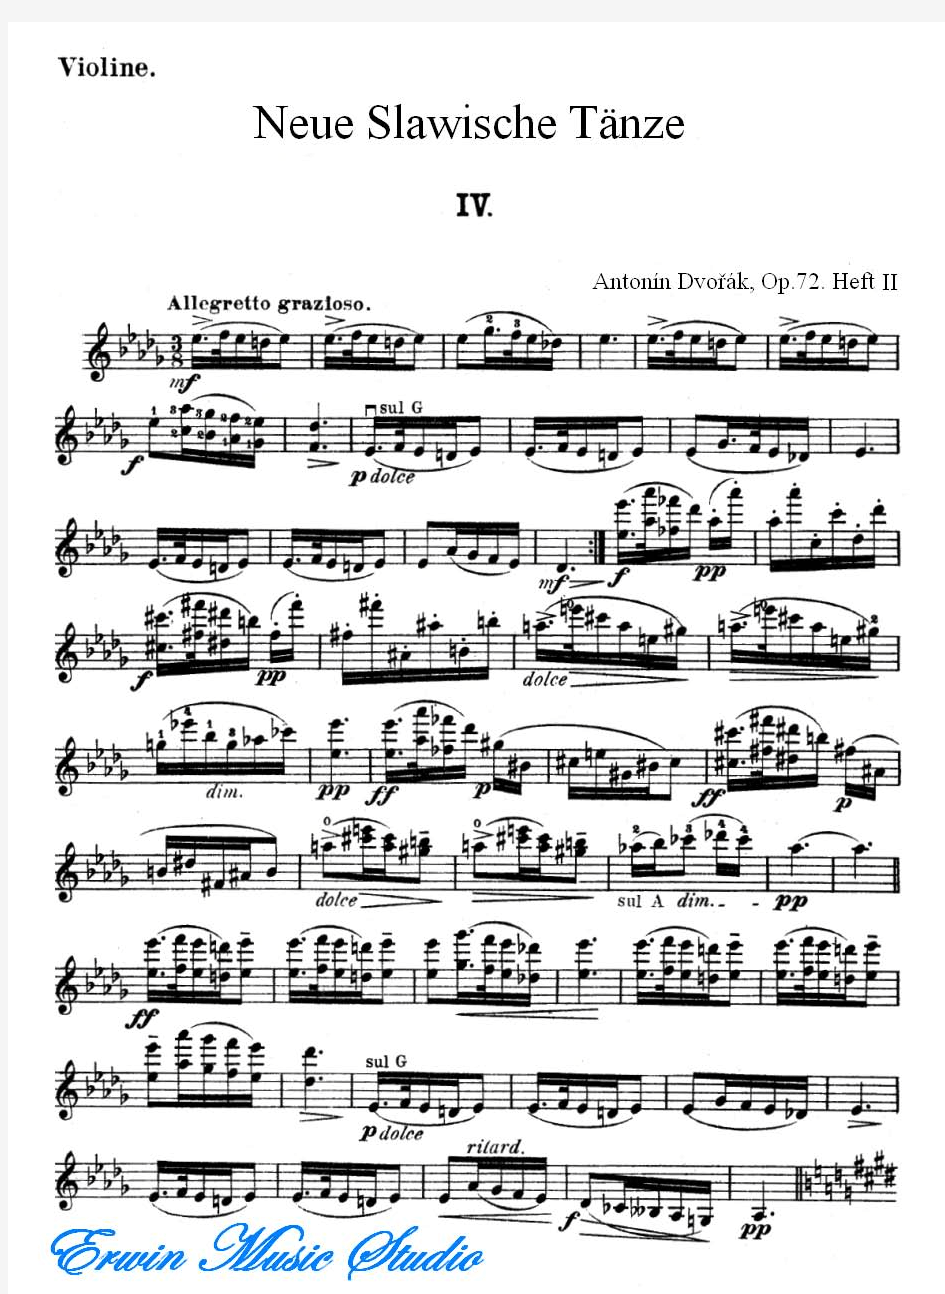 Violin安东尼德沃夏克《斯拉夫舞曲》作品.47,第4首小提琴 钢琴伴奏曲谱AntoninDvorak,SlavonicDances,